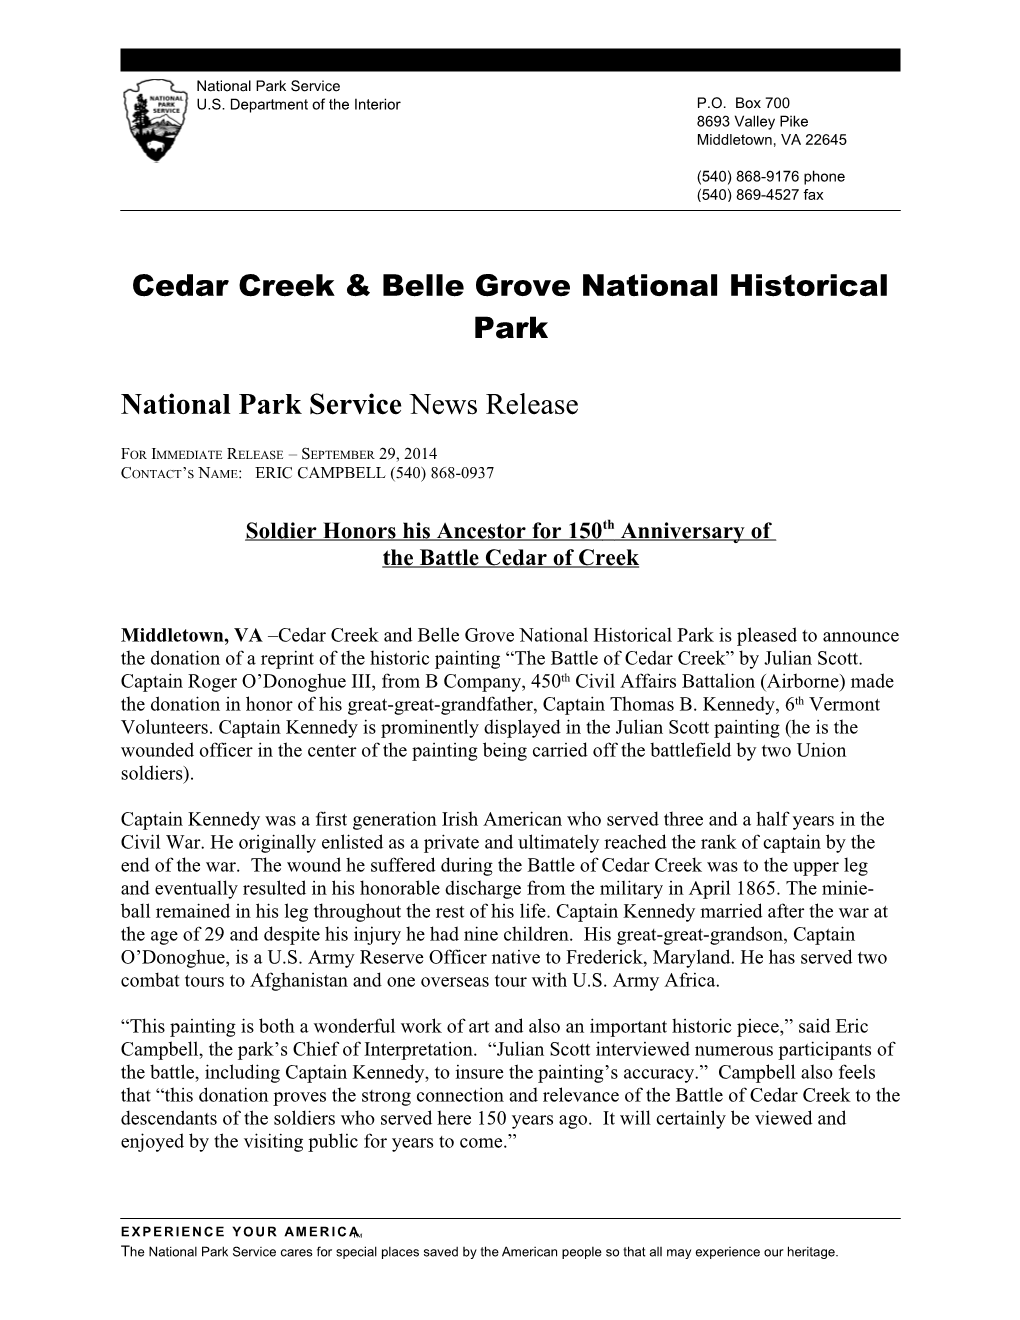 Cedar Creek & Belle Grove National Historical Park